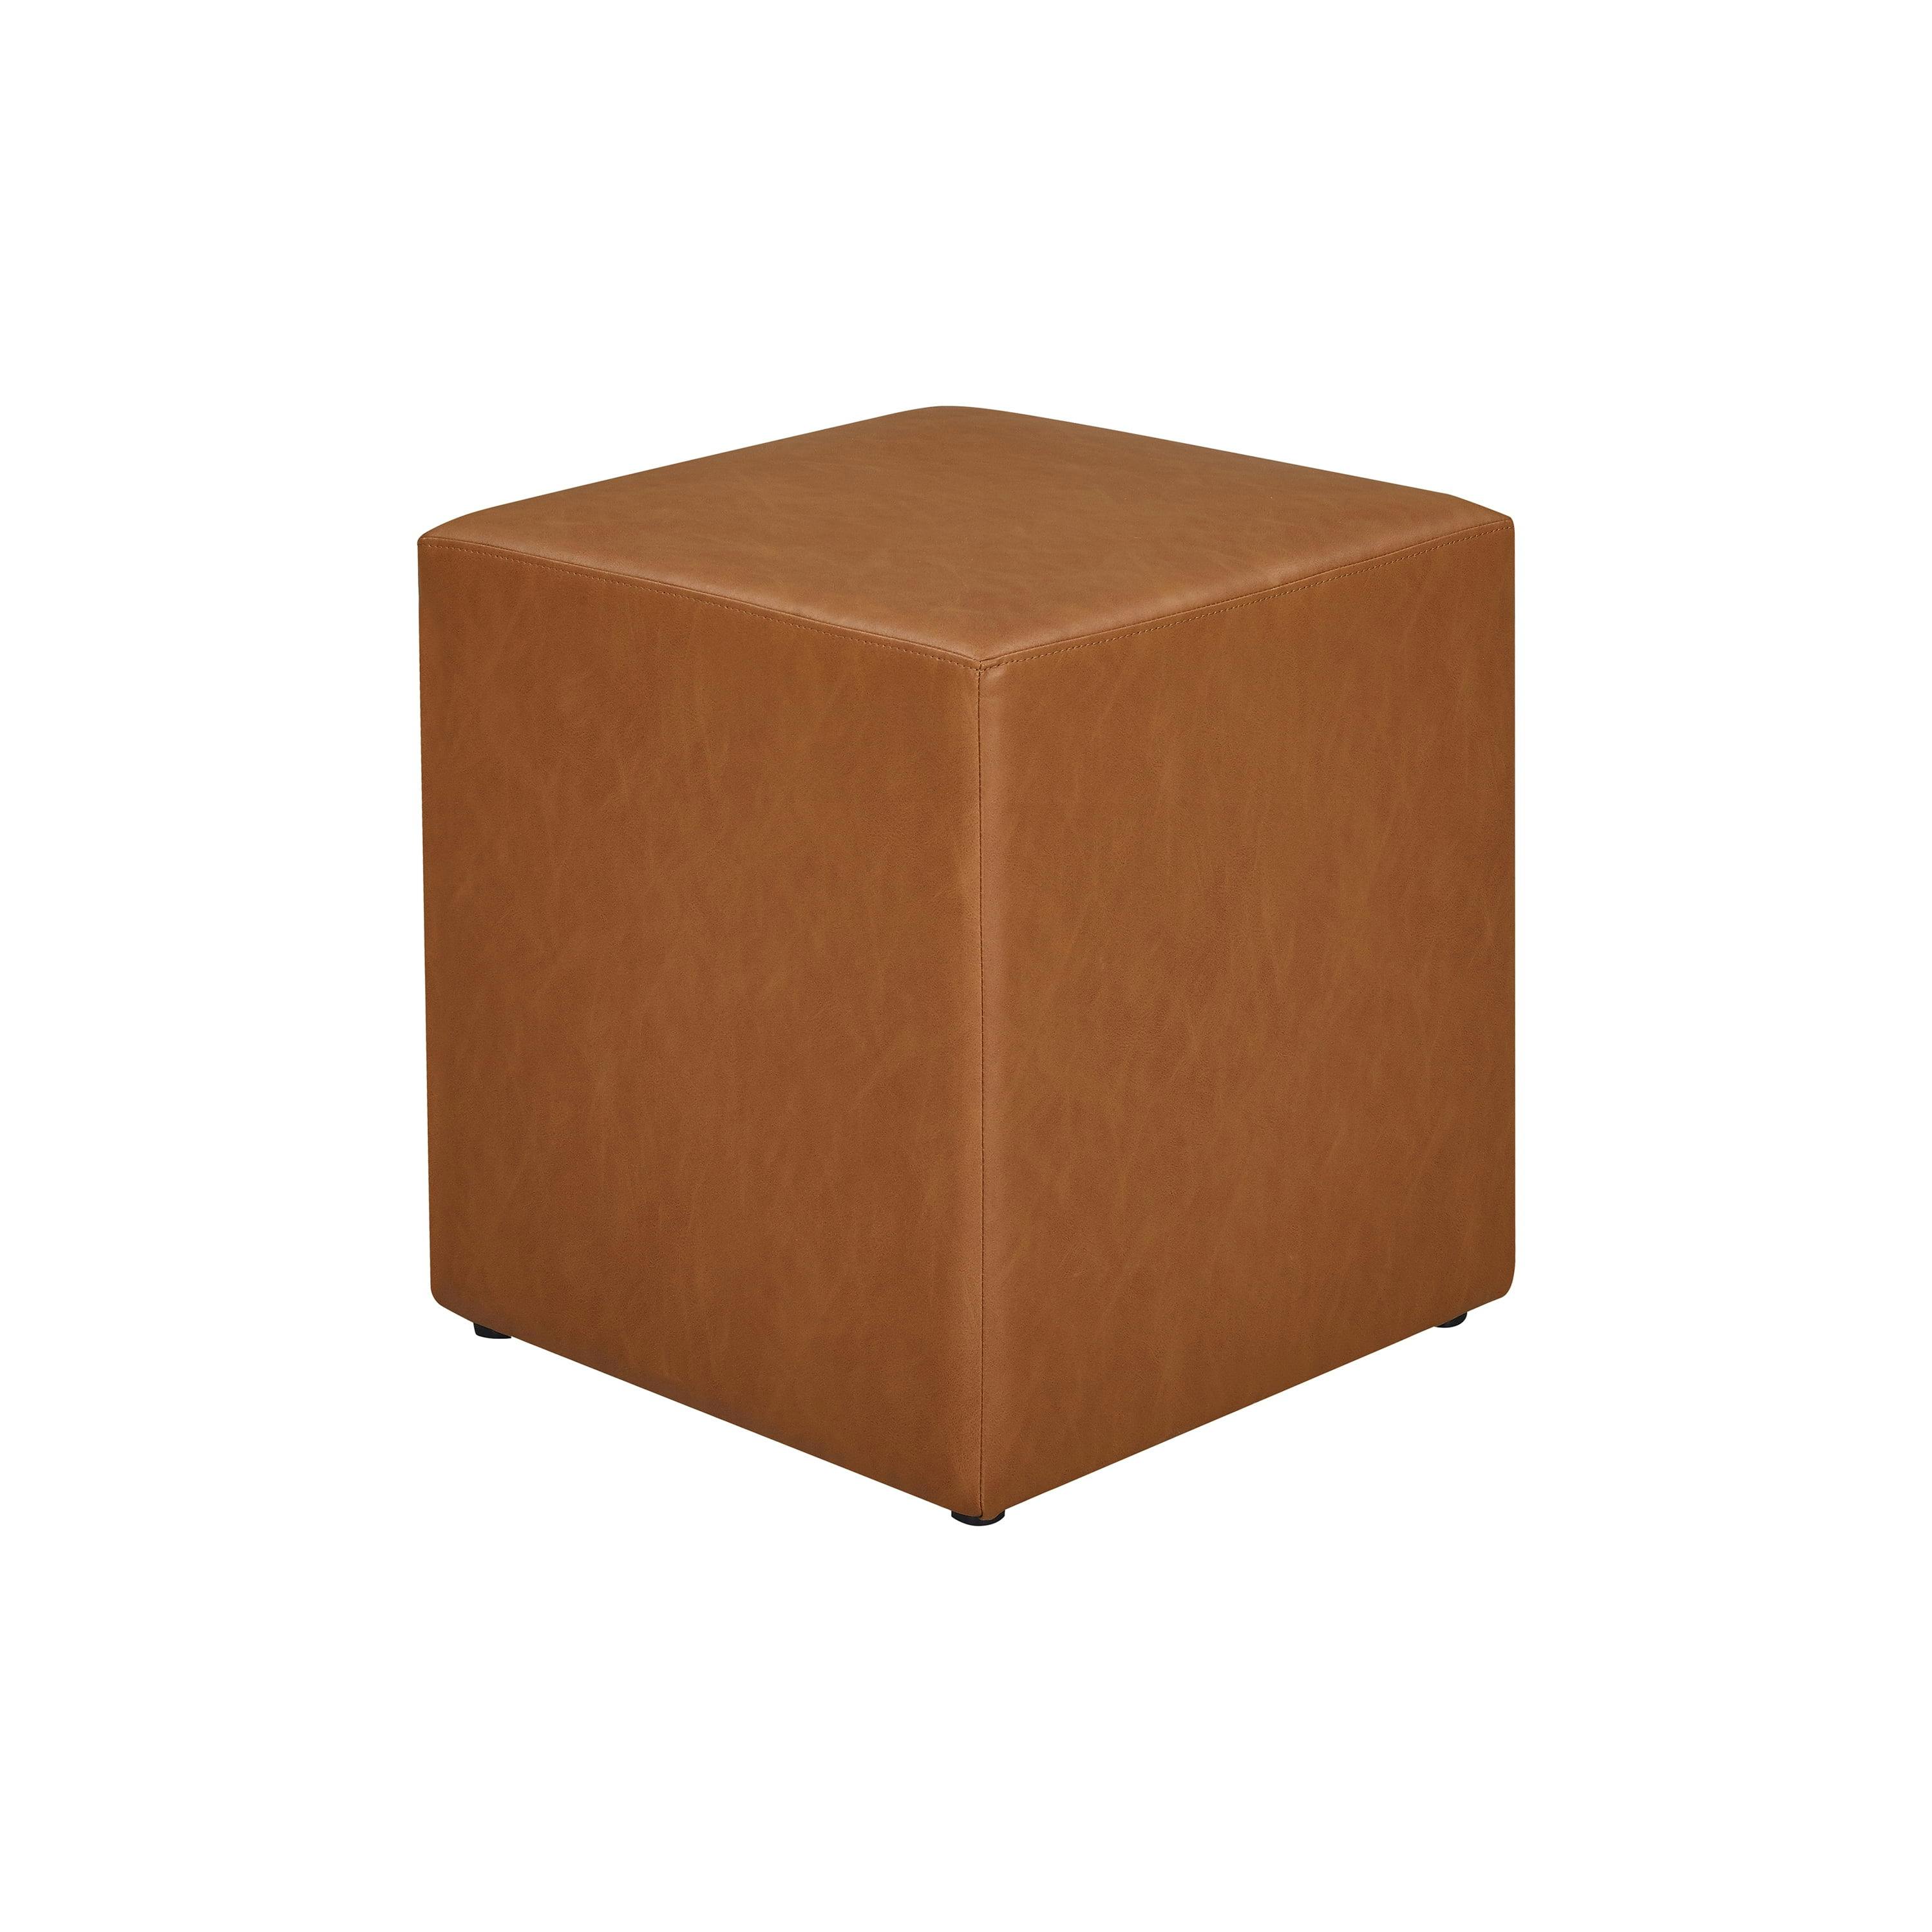 Carmel Faux Leather Cube Ottoman with Pocket Coil Cushion